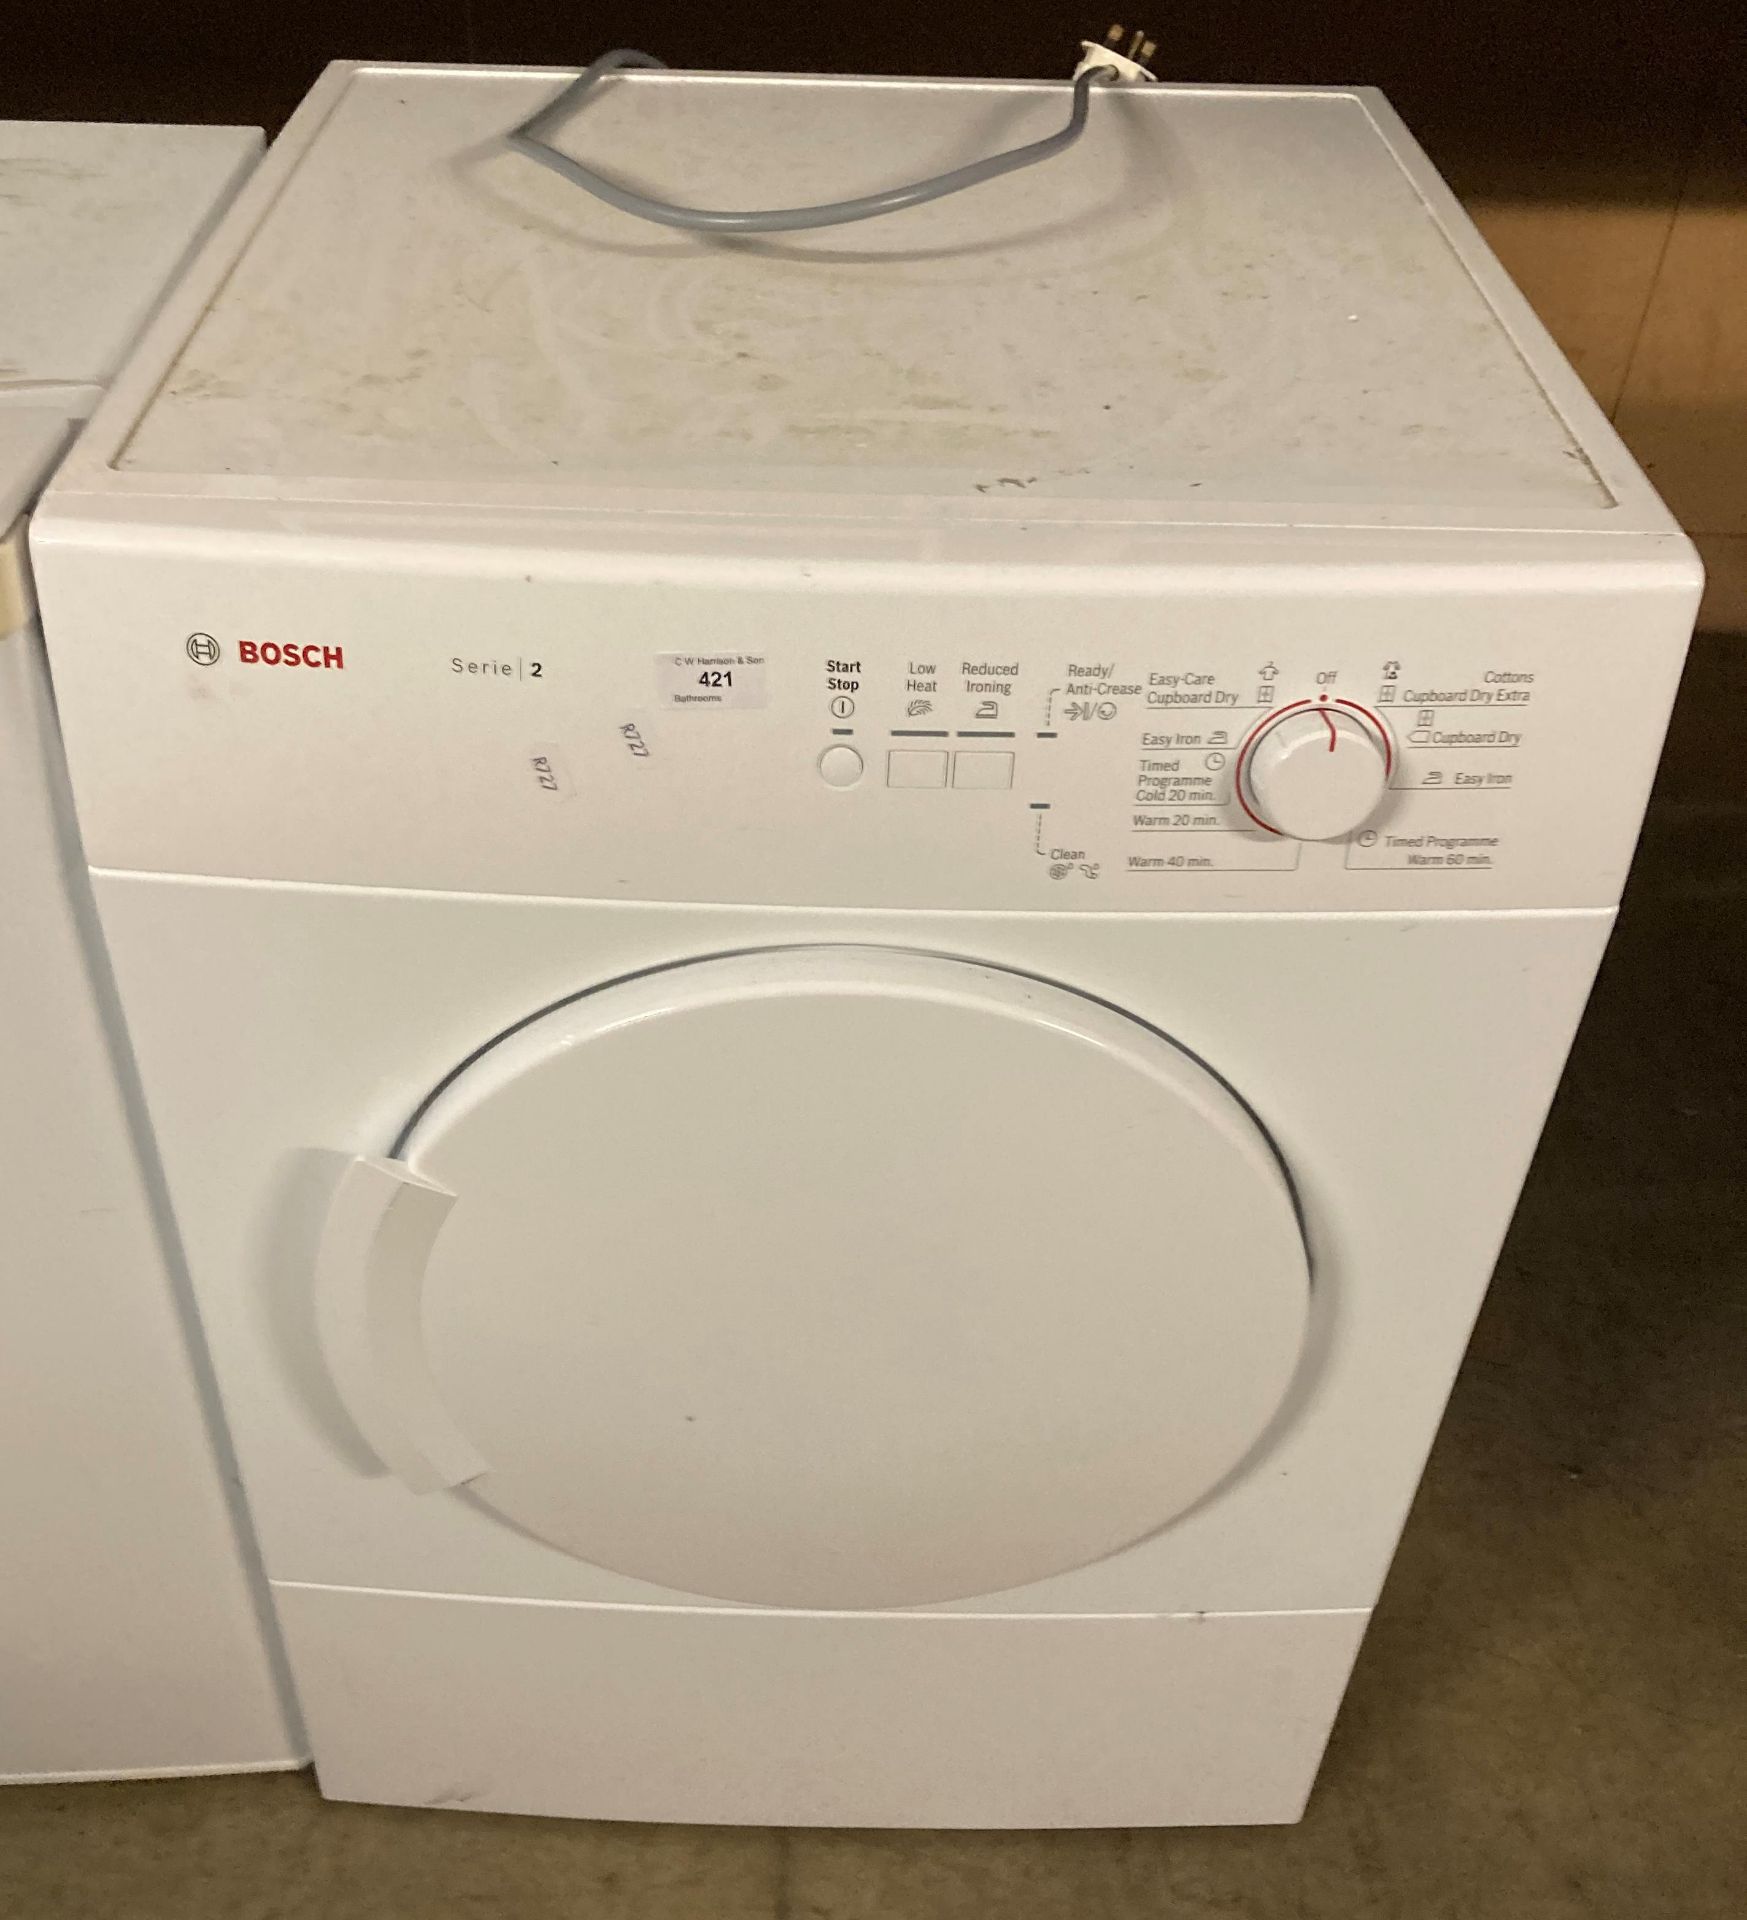 Bosch Series 2 tumble dryer (saleroom location: PO)